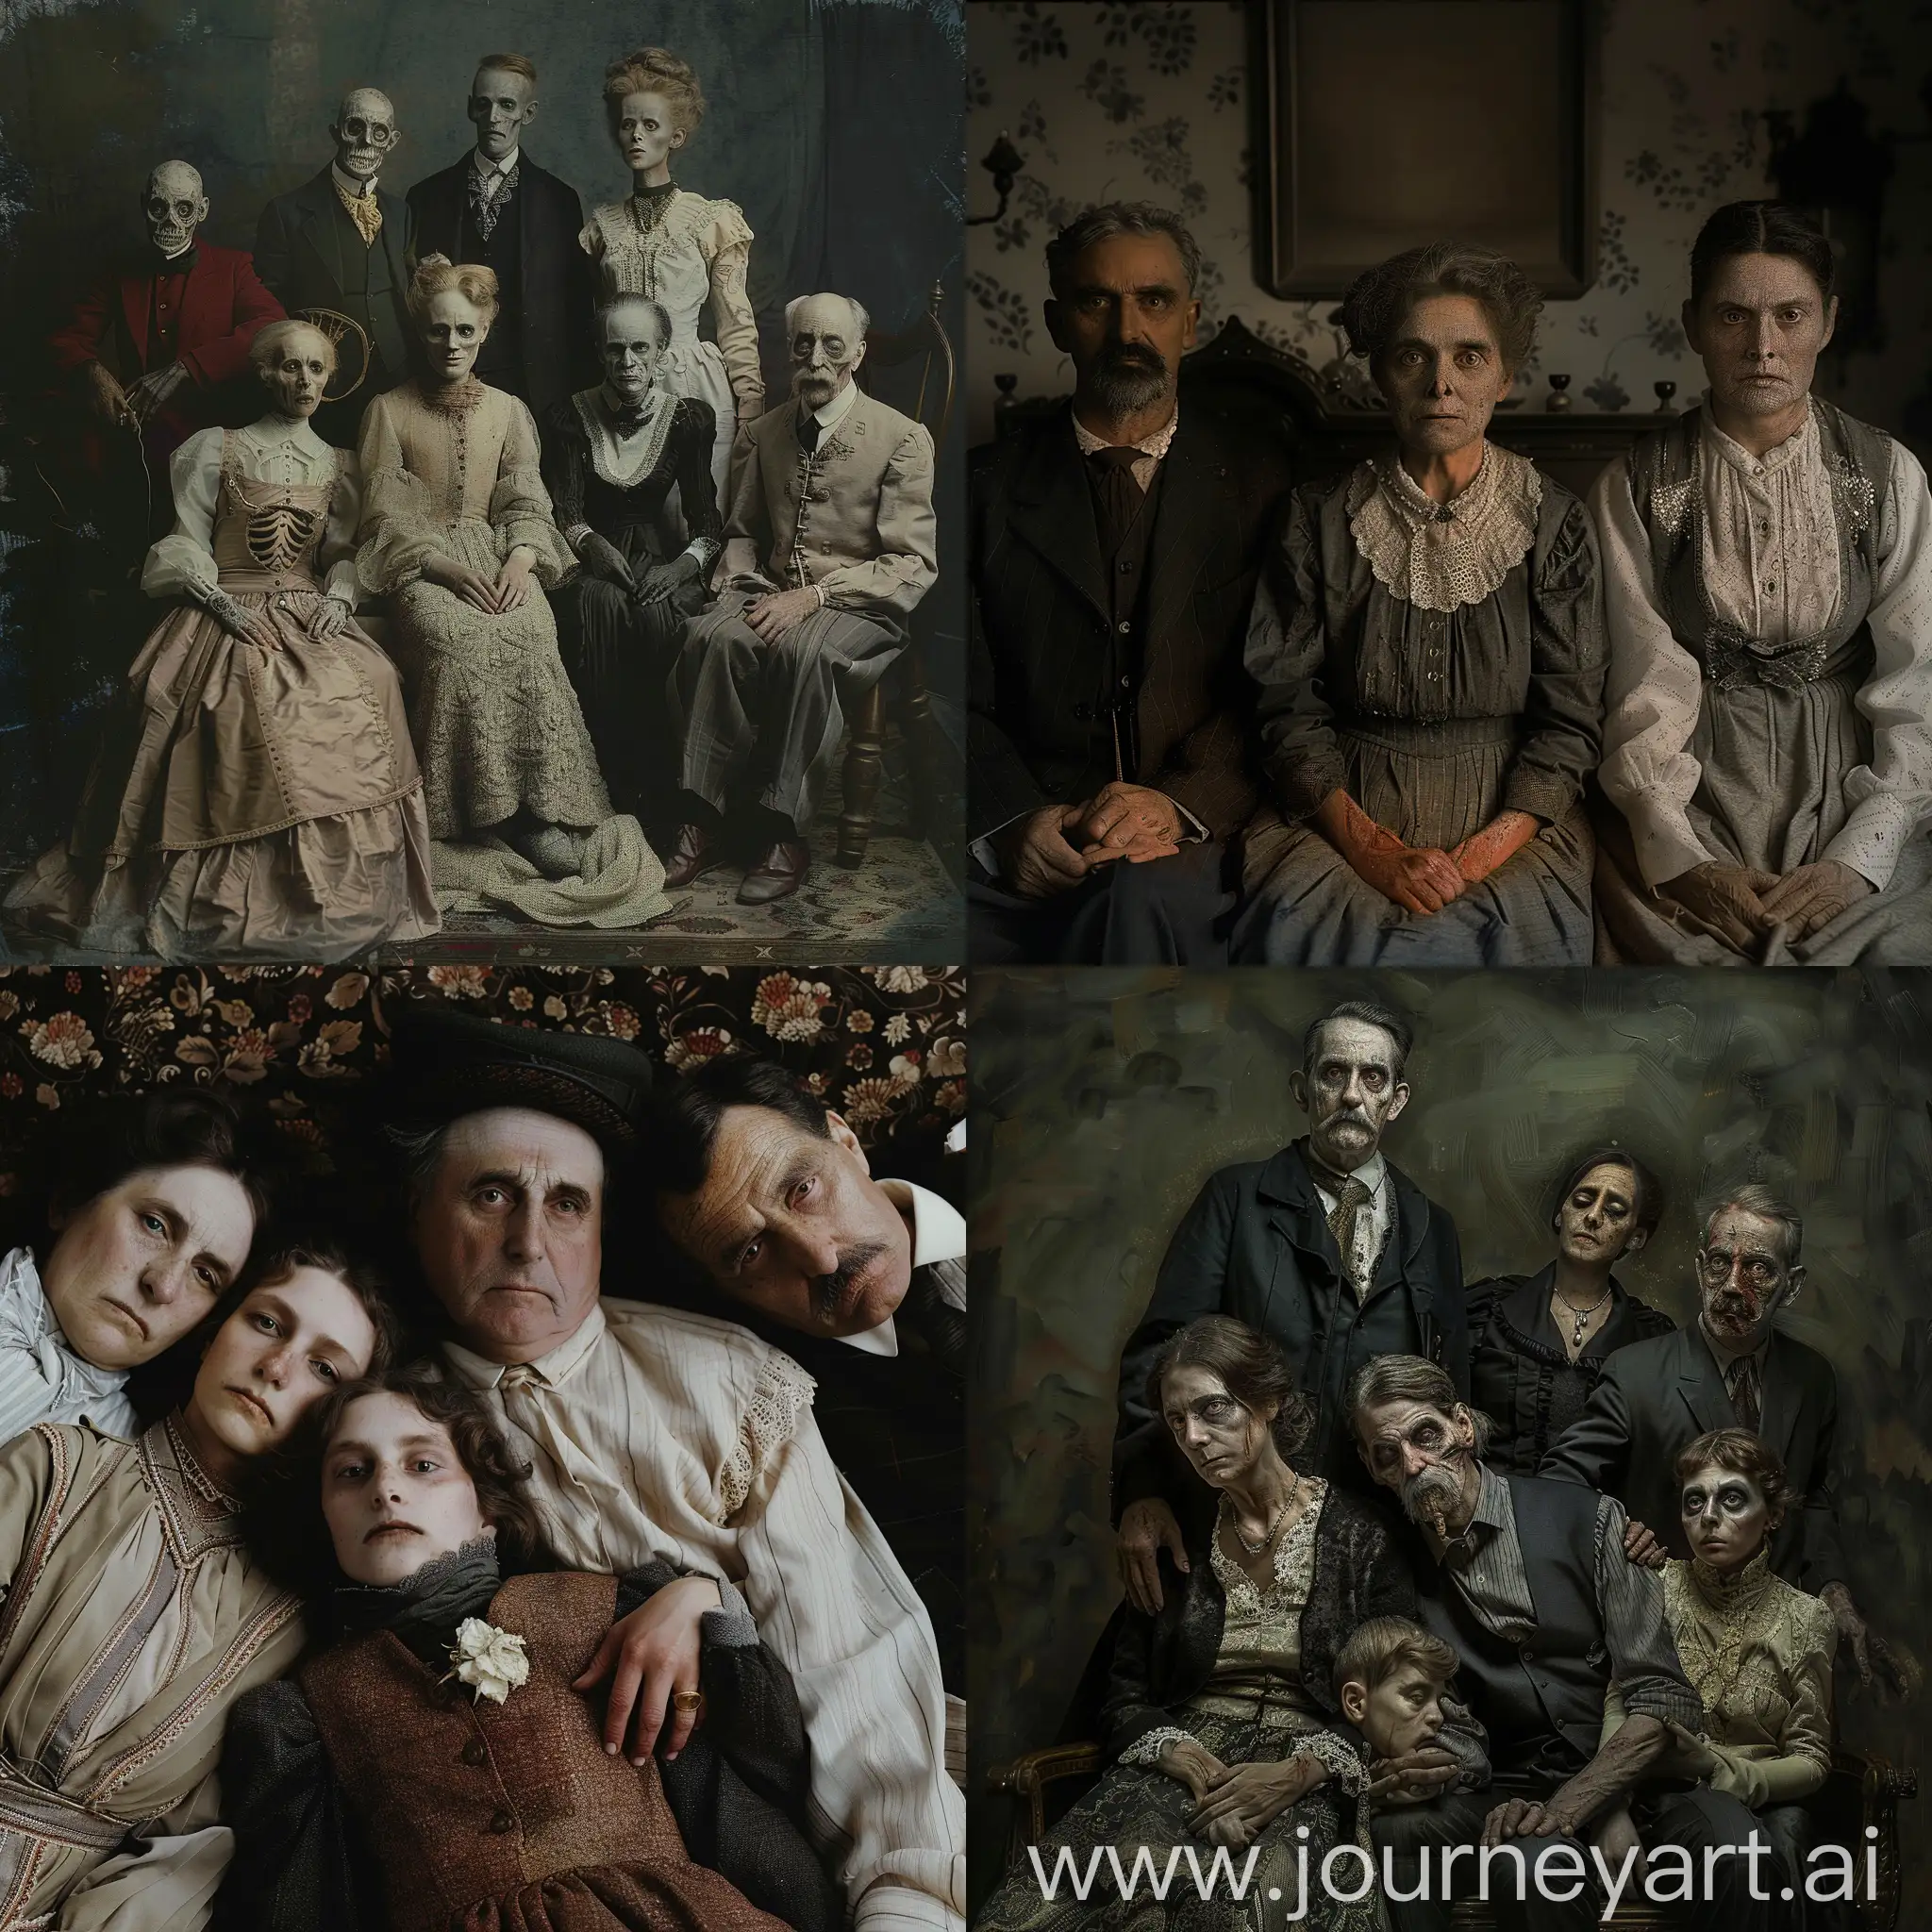 Eerie-1900s-Family-Portrait-Mysterious-Members-in-Cinematic-Lighting